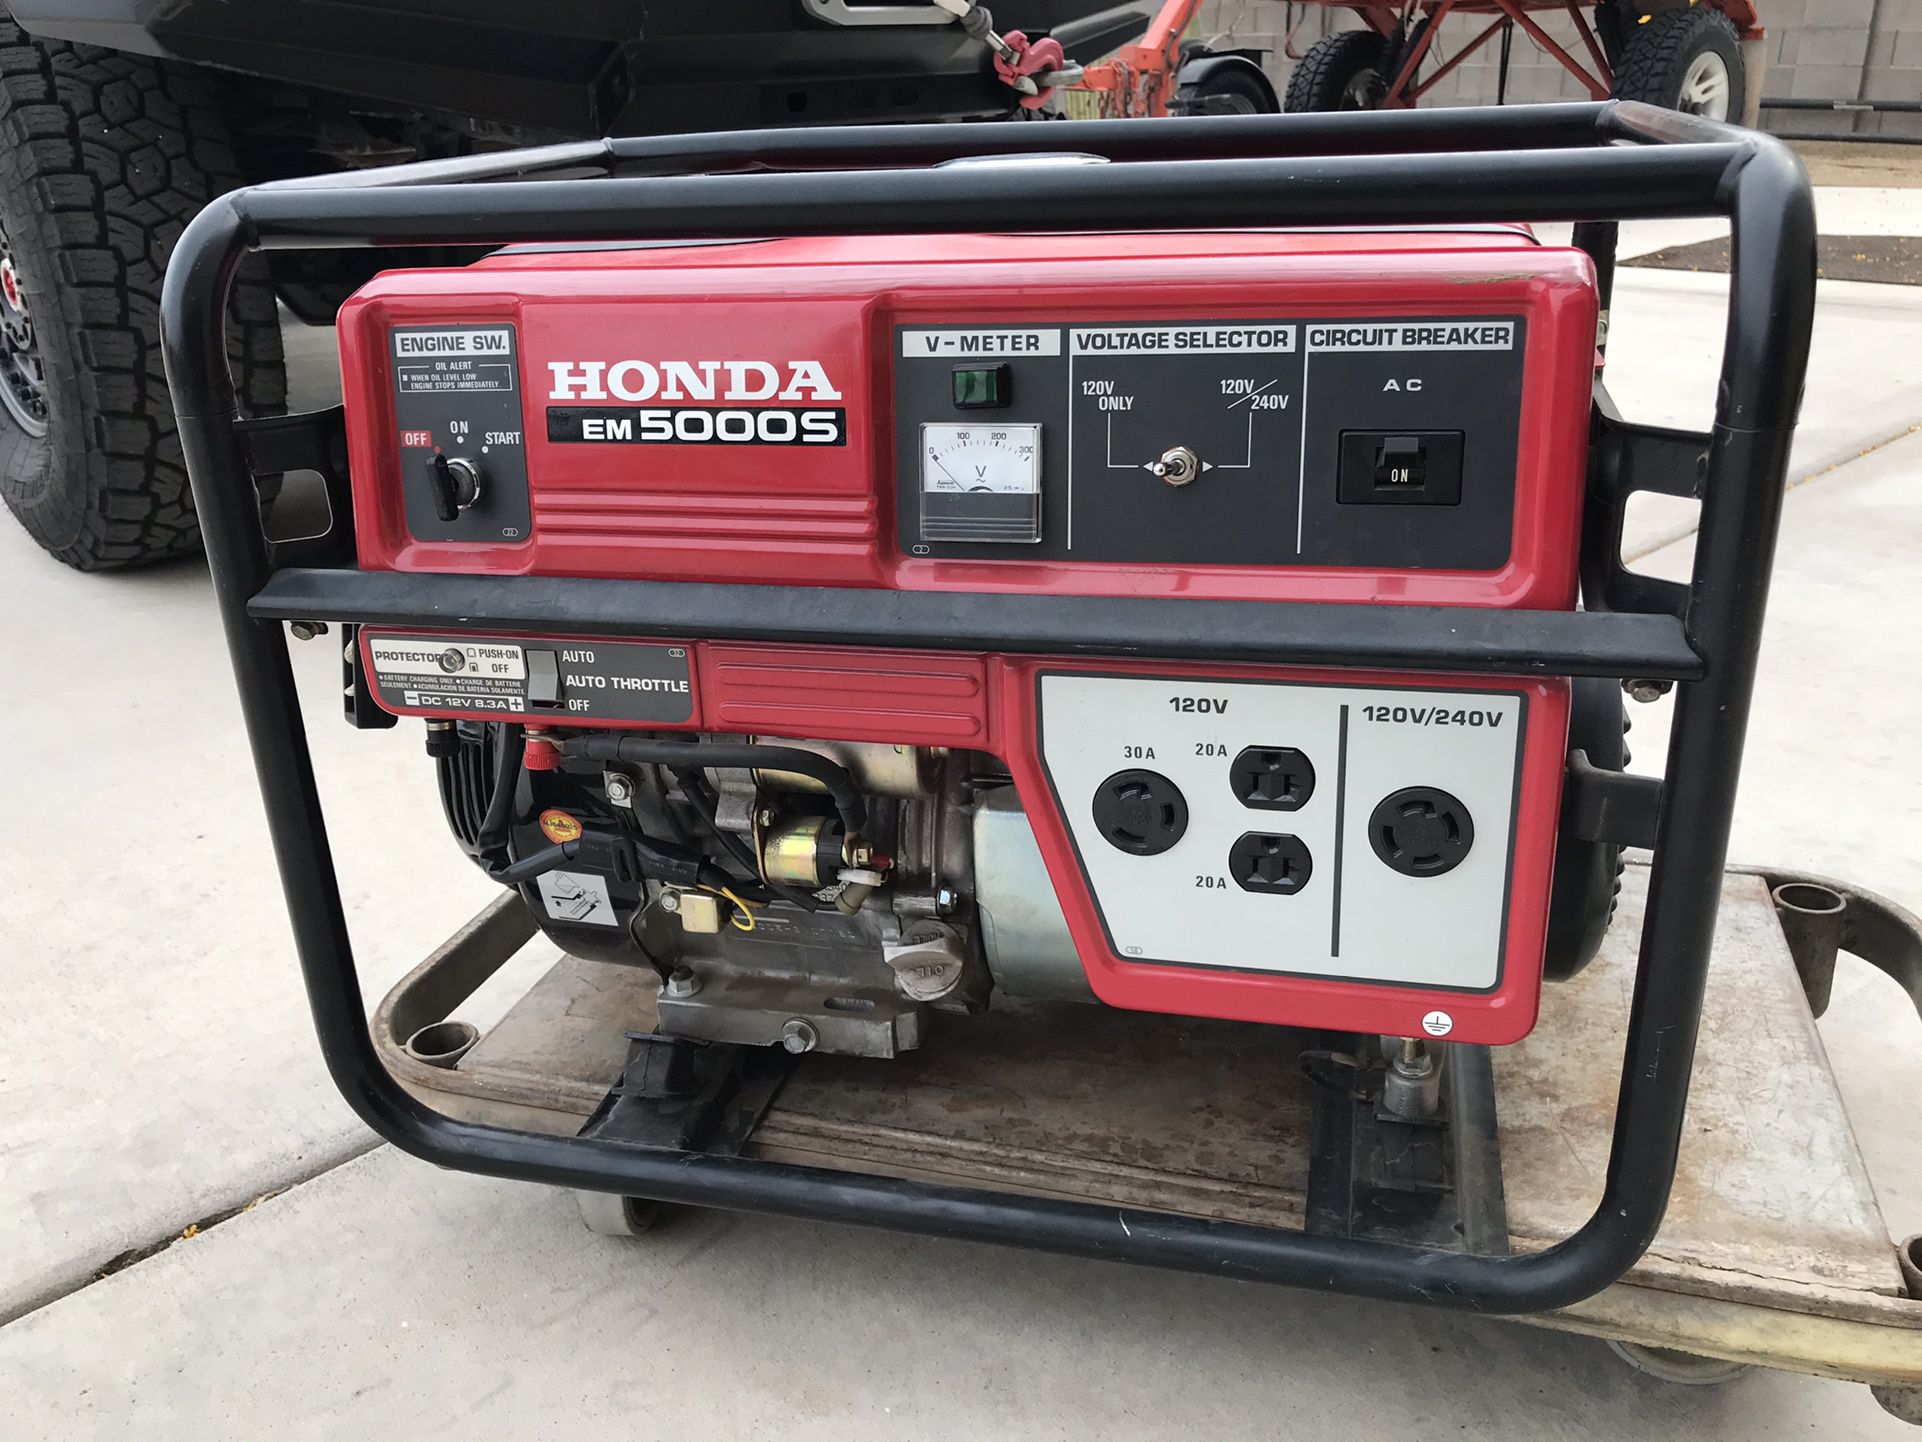 Honda EM 5000 S electric start generator